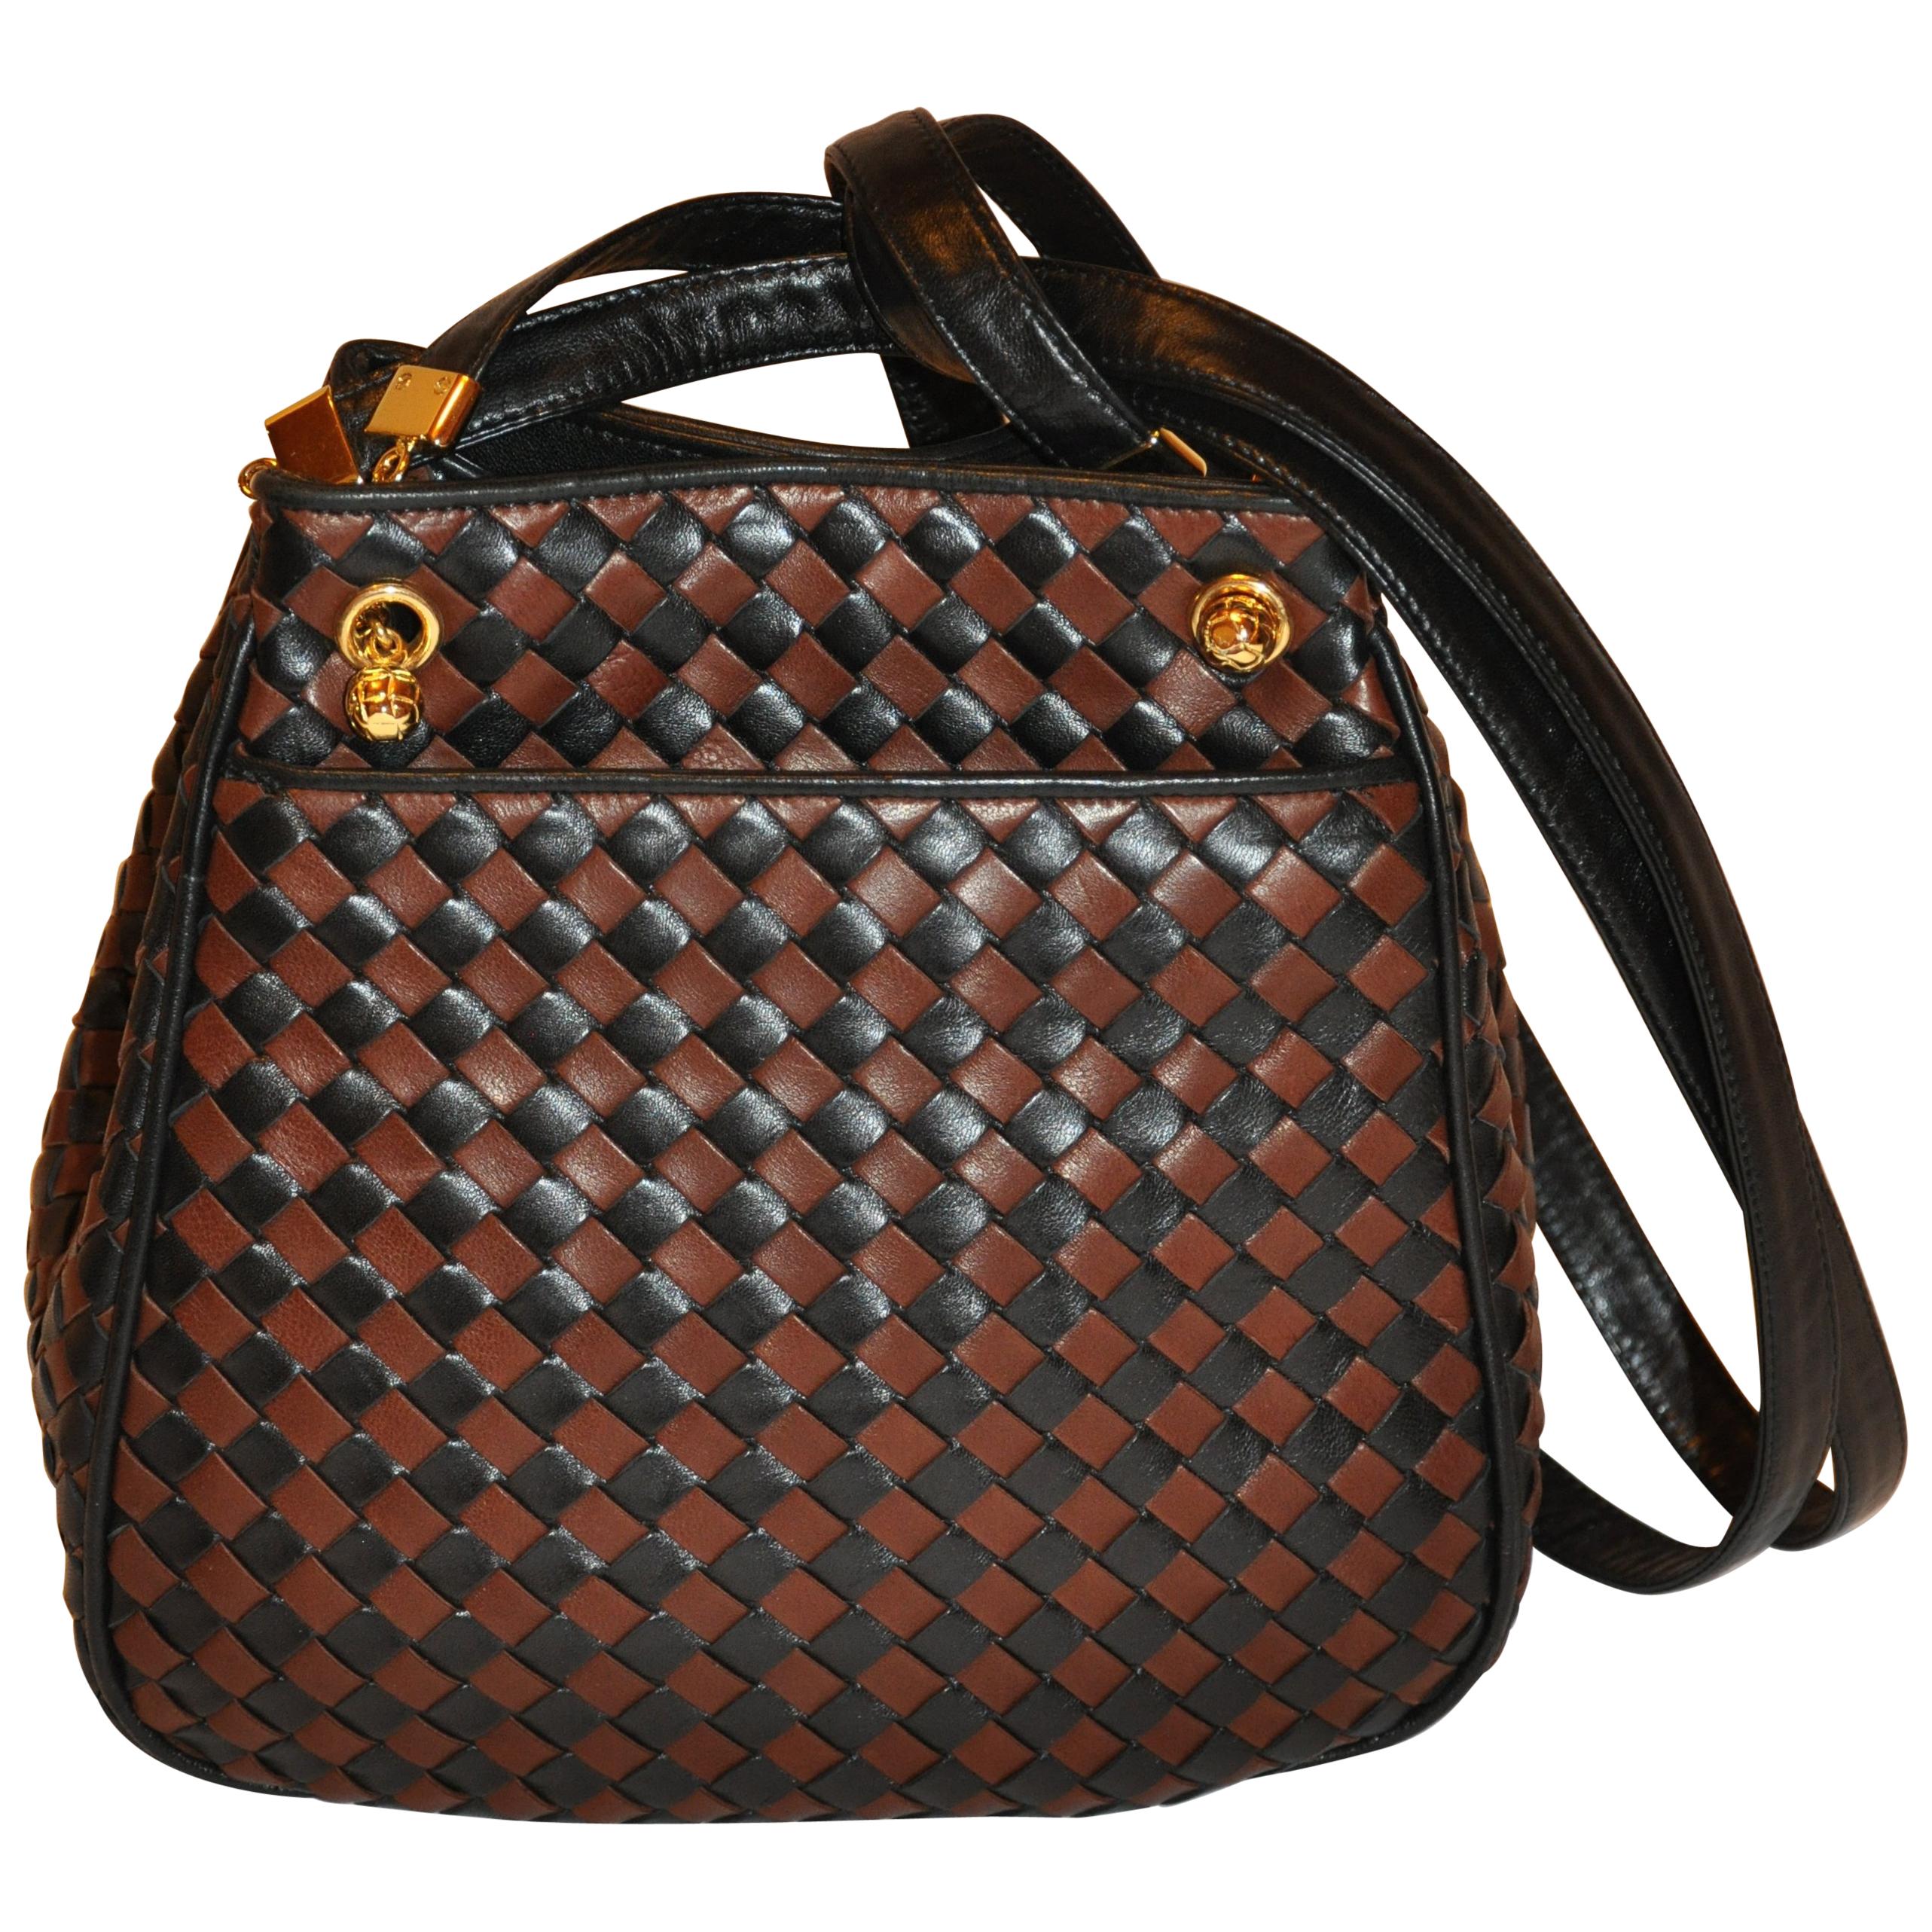 Bottega Veneta Coco-Brown & Black Woven Lambskin Shoulder Bag with Gold Hardware